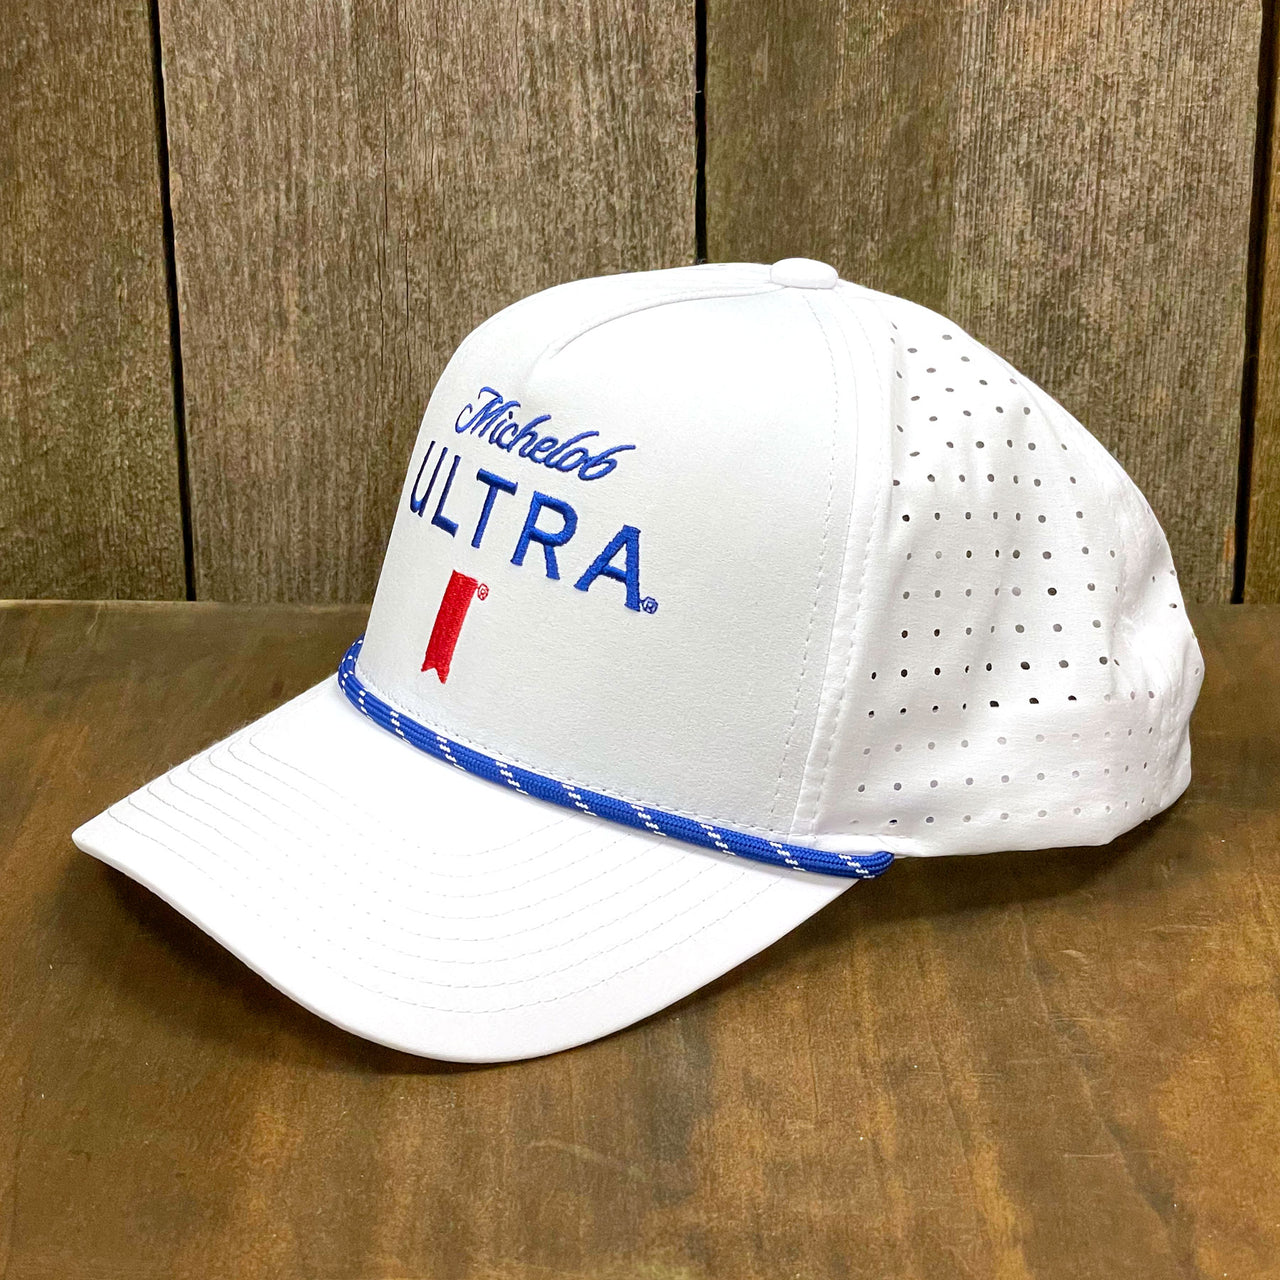 Michelob Ultra - Golf Hat - Snapback Hat